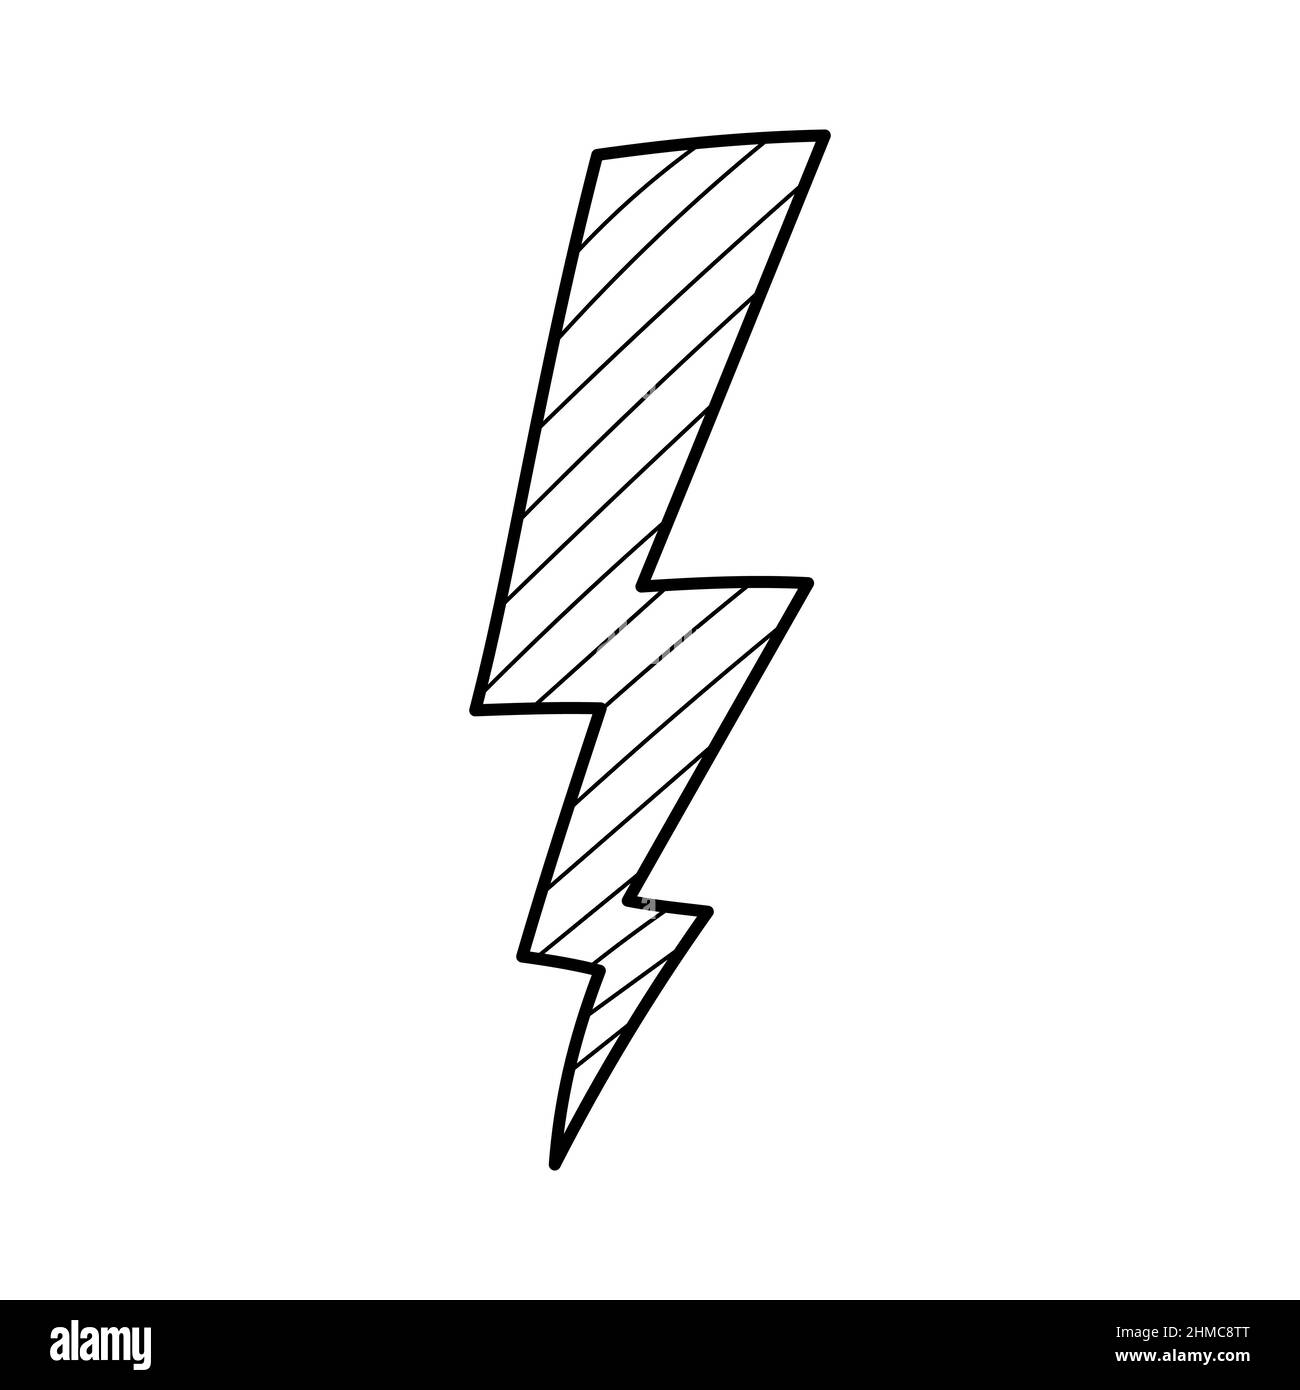 Ash and Pikachu  10 Million volt thunderbolt by MangaGlitch on DeviantArt